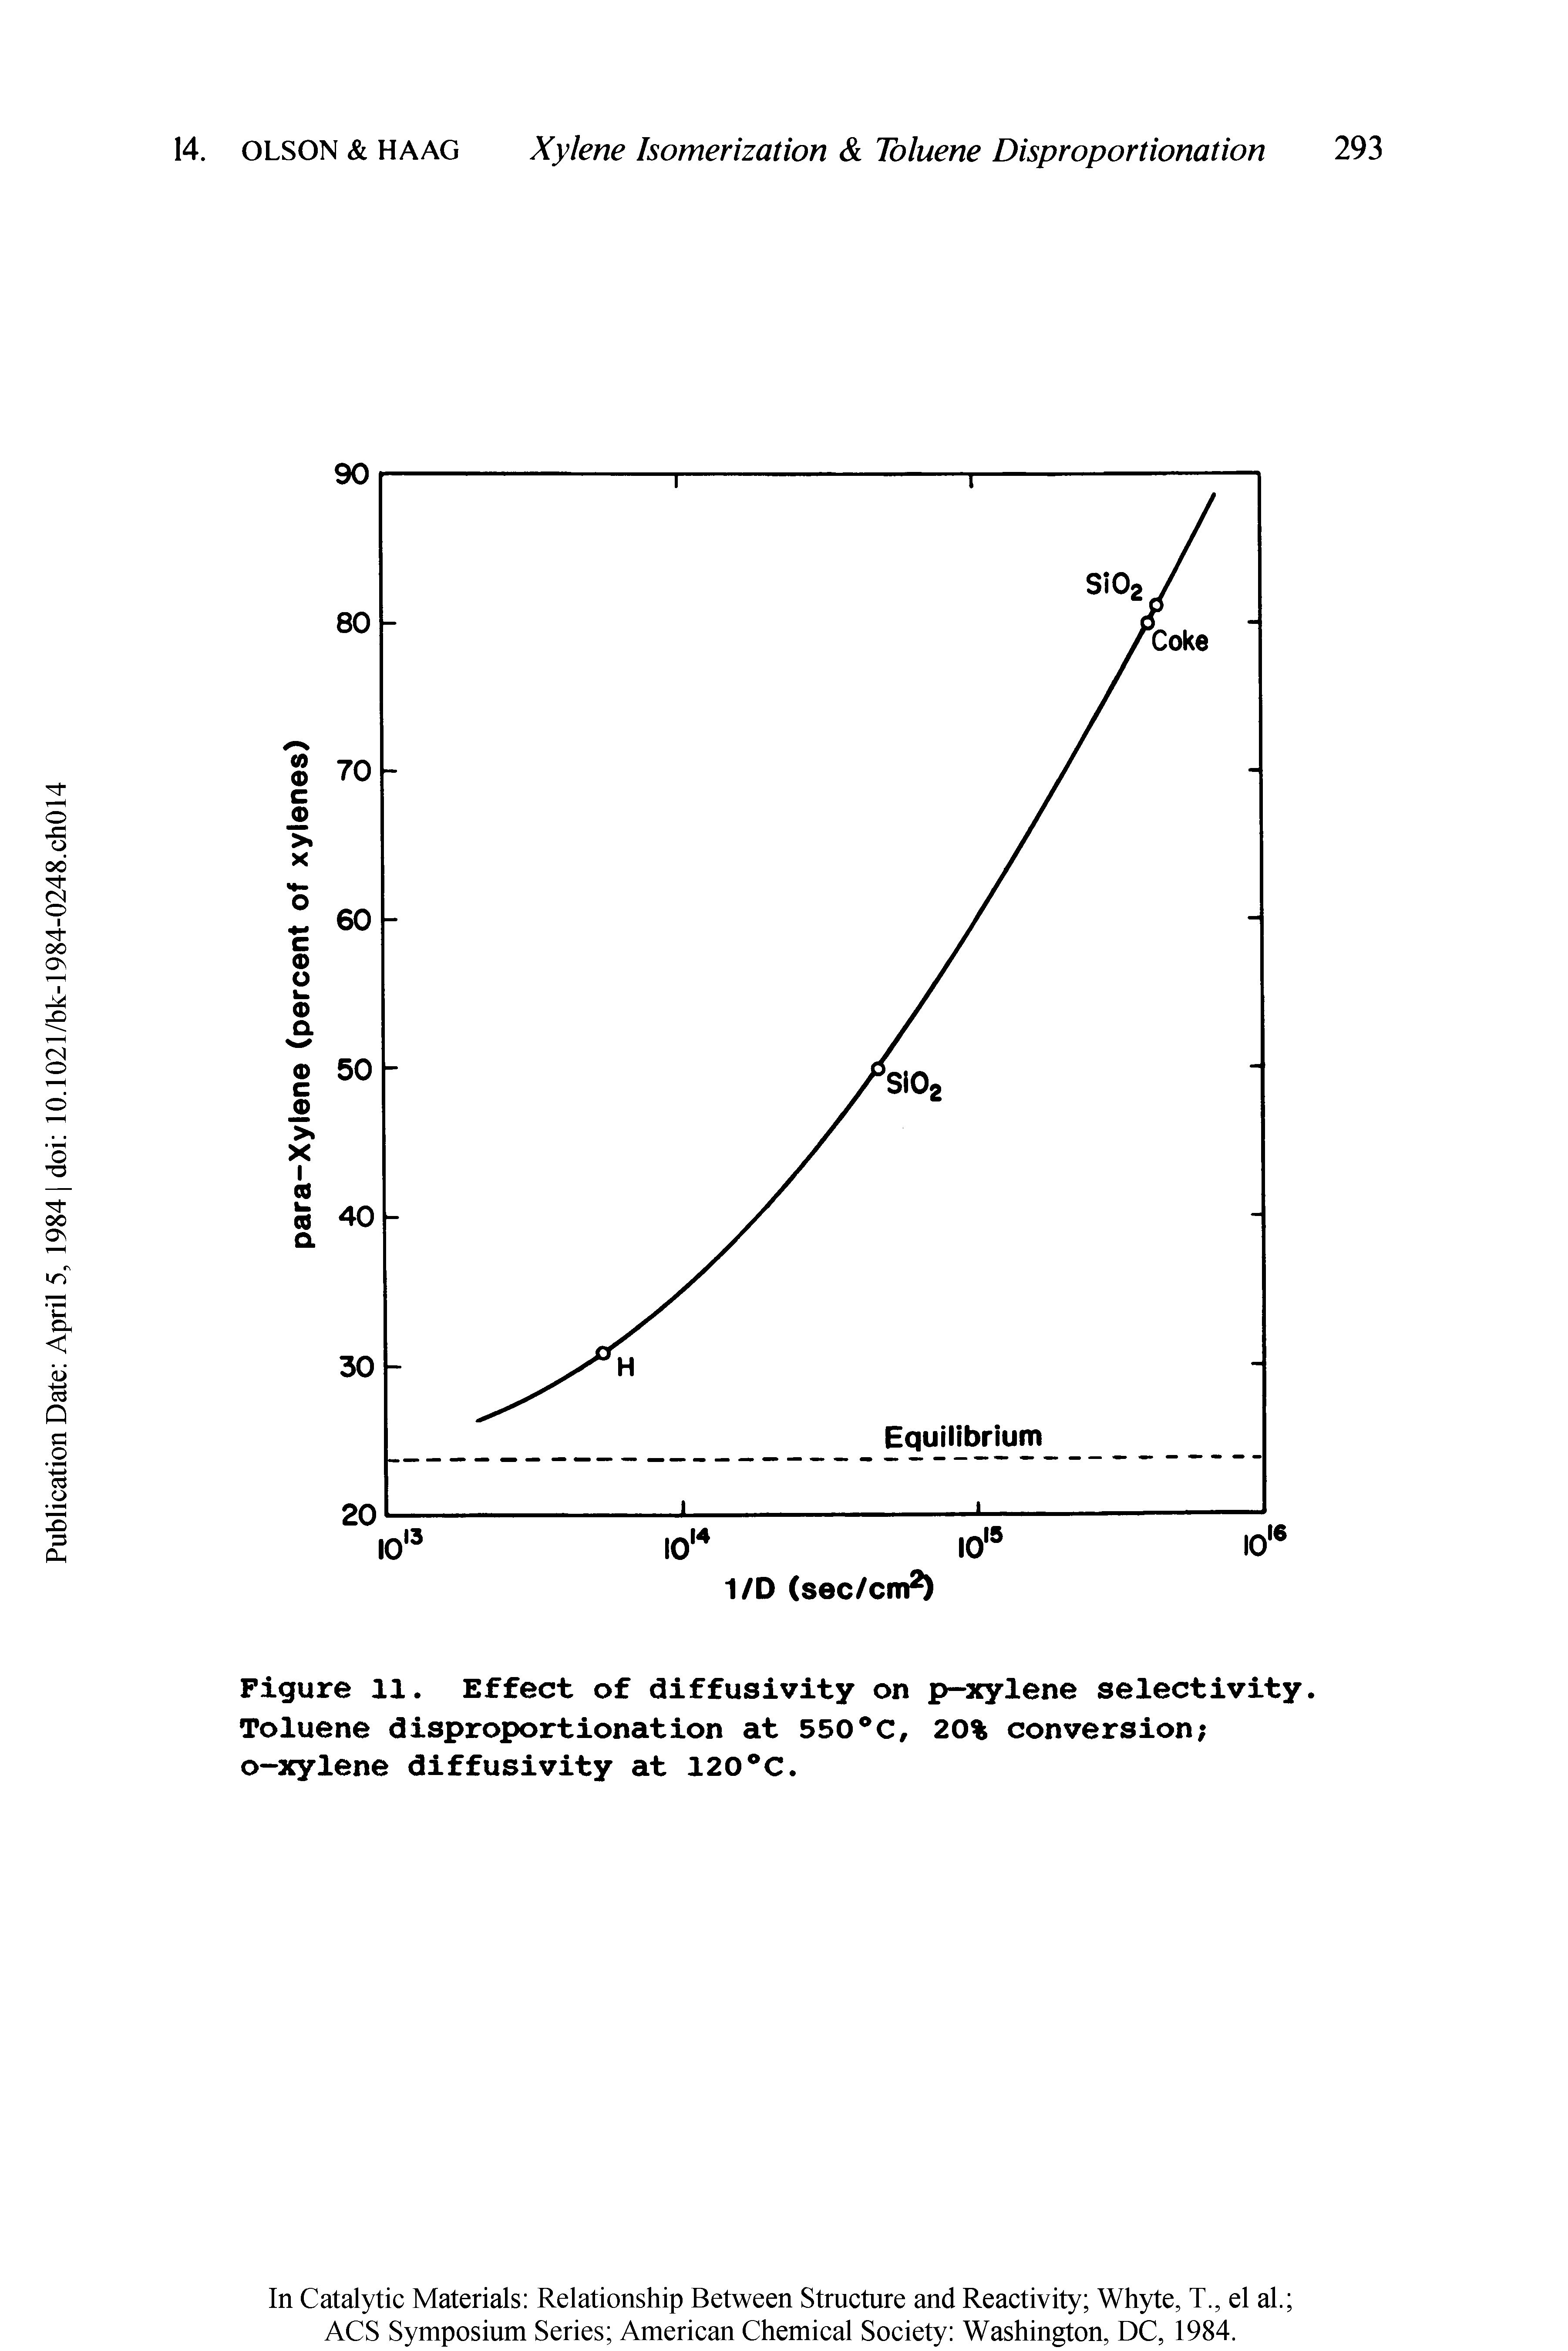 Figure 11. Effect of diffusivity on p-xylene selectivity. Toluene disproportionation at 550°C, 20% conversion o-xylene diffusivity at 120°C.